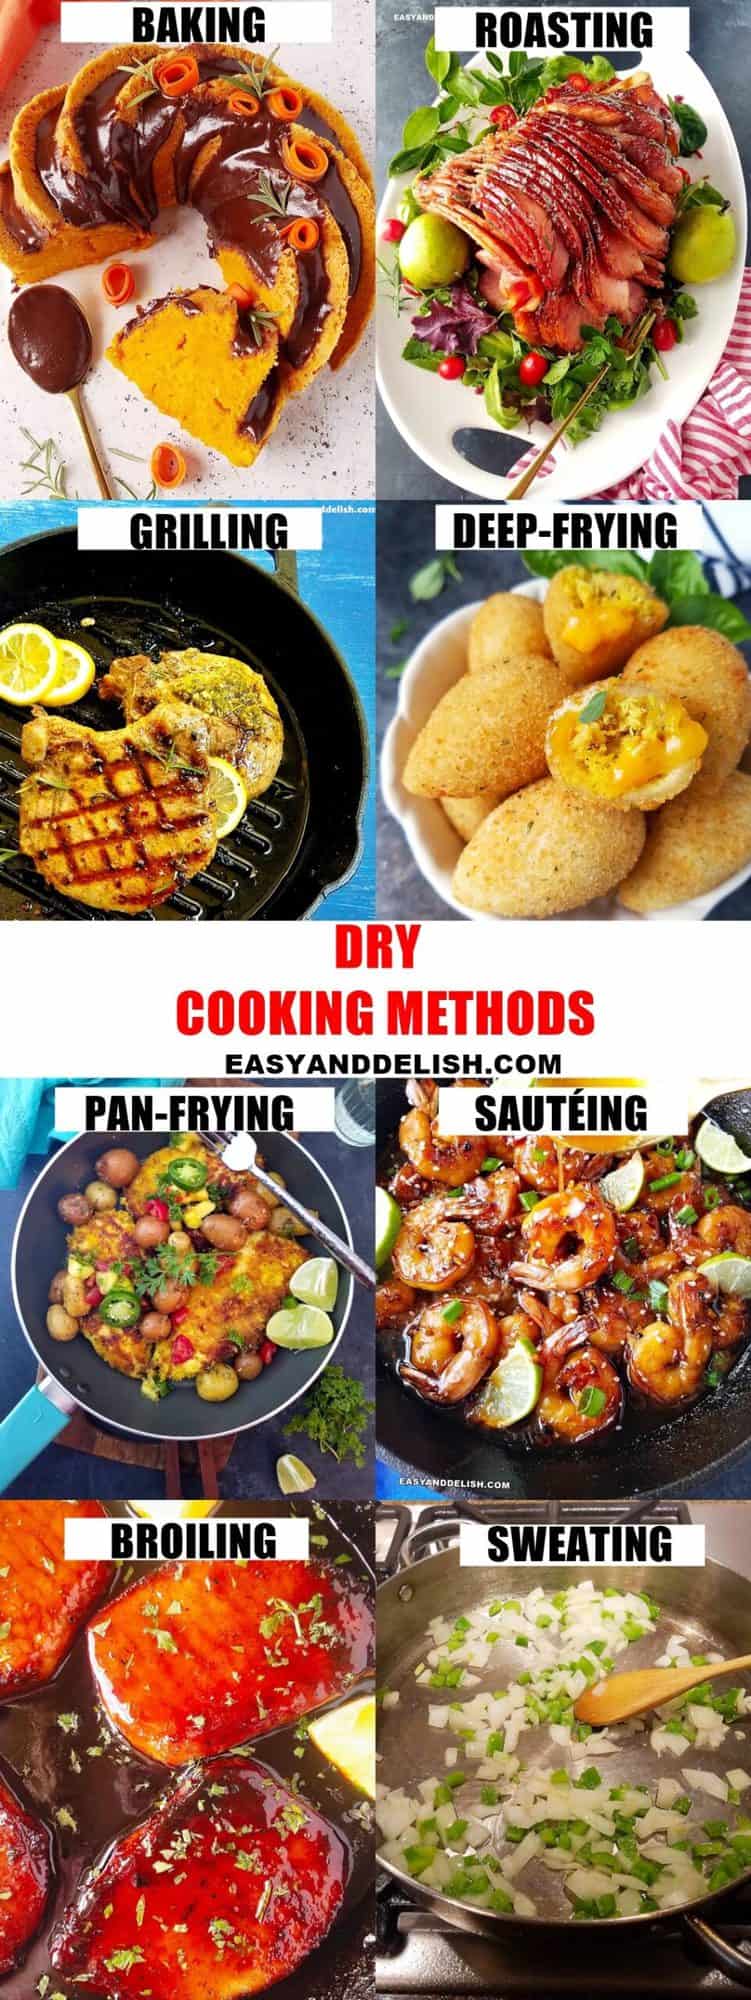 https://www.easyanddelish.com/wp-content/uploads/2021/02/8-dry-cooking-methods-scaled.jpg